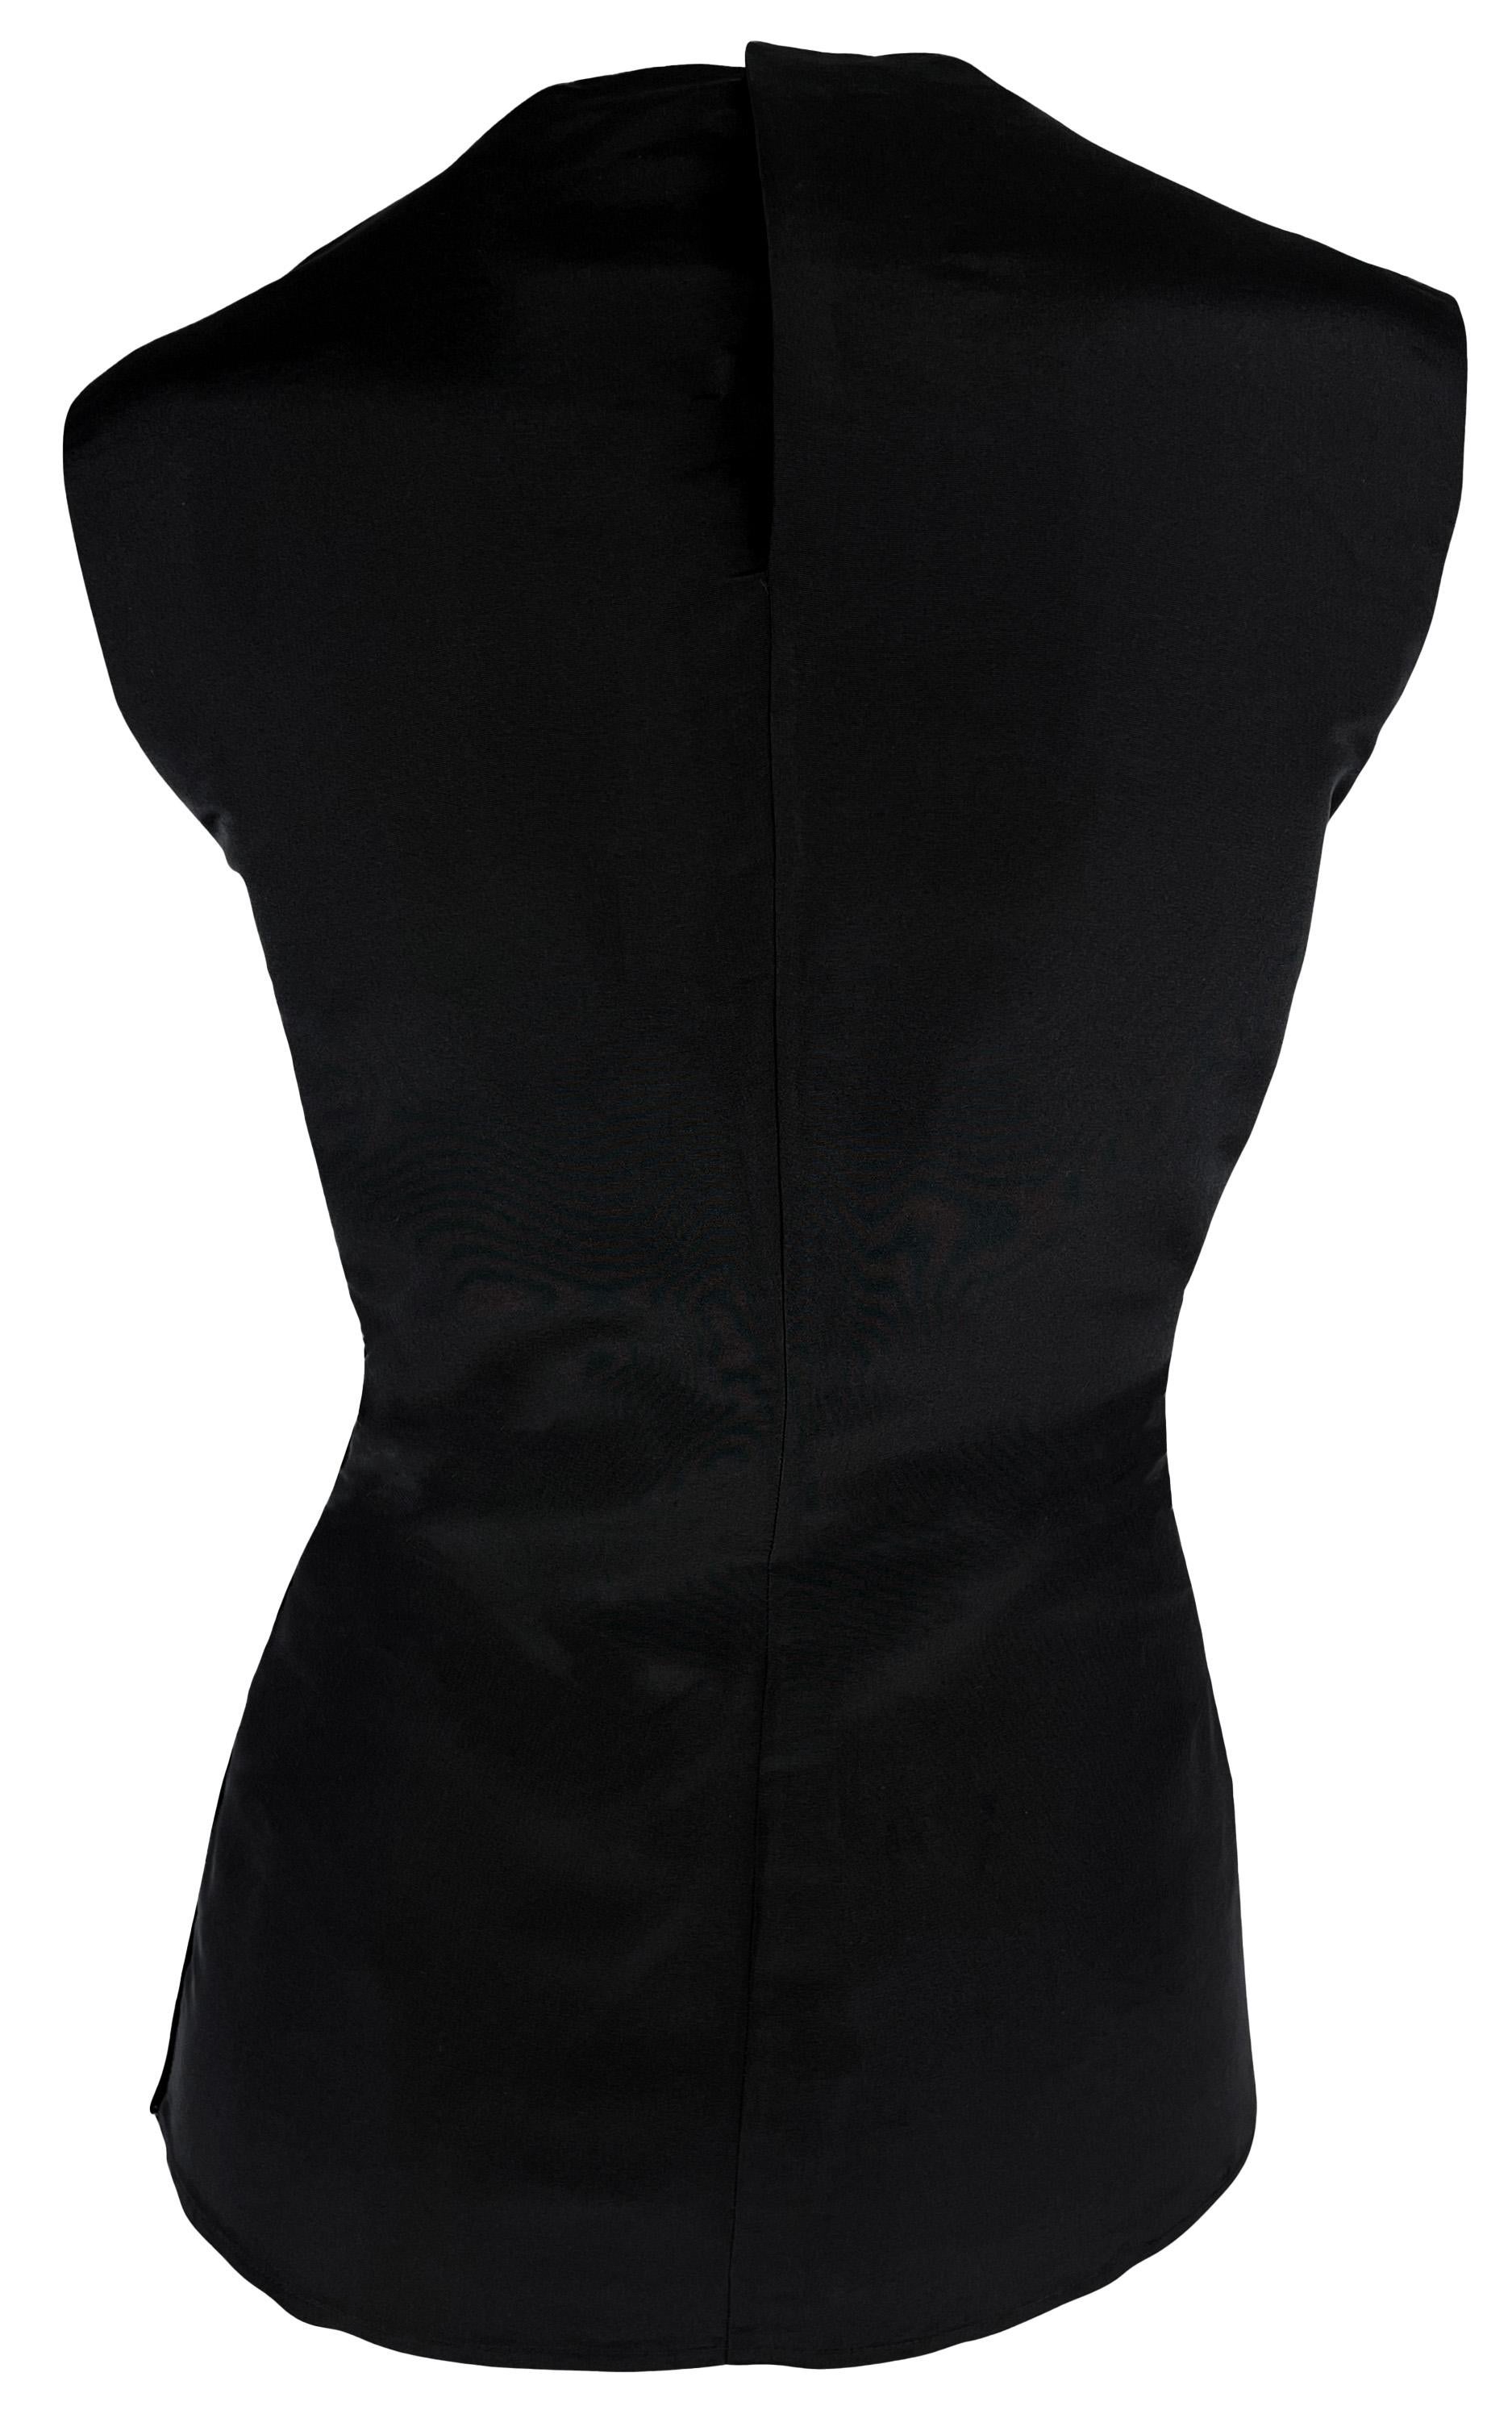 Women's S/S 1990 Gianni Versace Black Silk Taffeta Tailored Fit Sleeveless Top For Sale